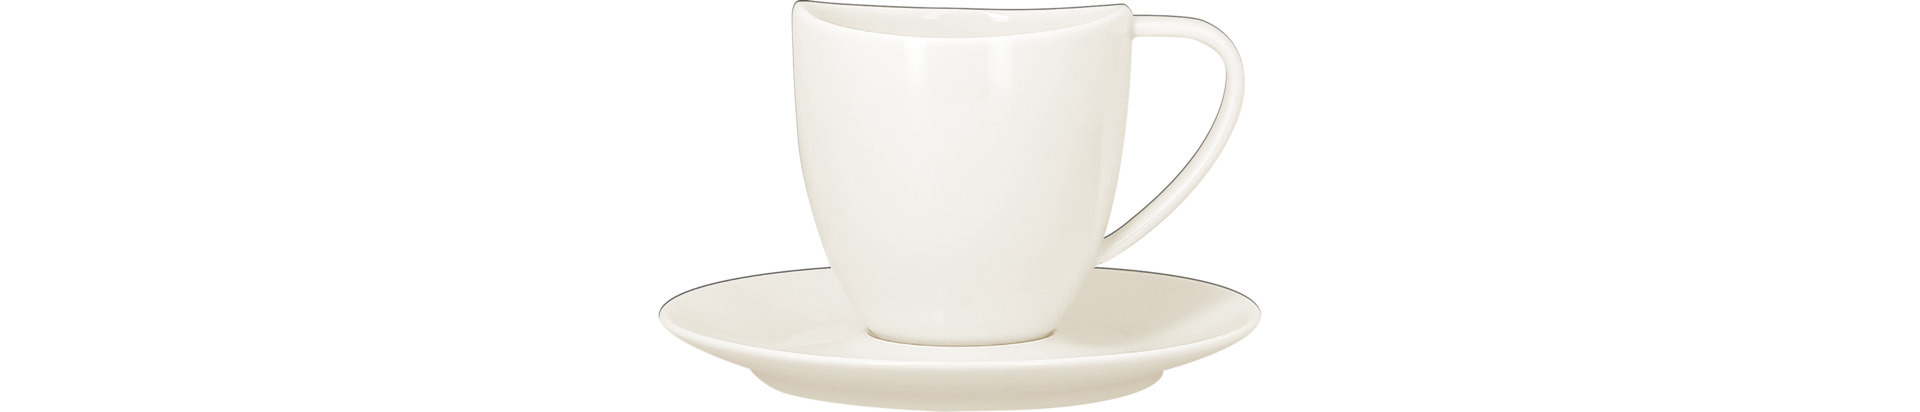 Kaffeetasse swirls 0,23 l plain-white